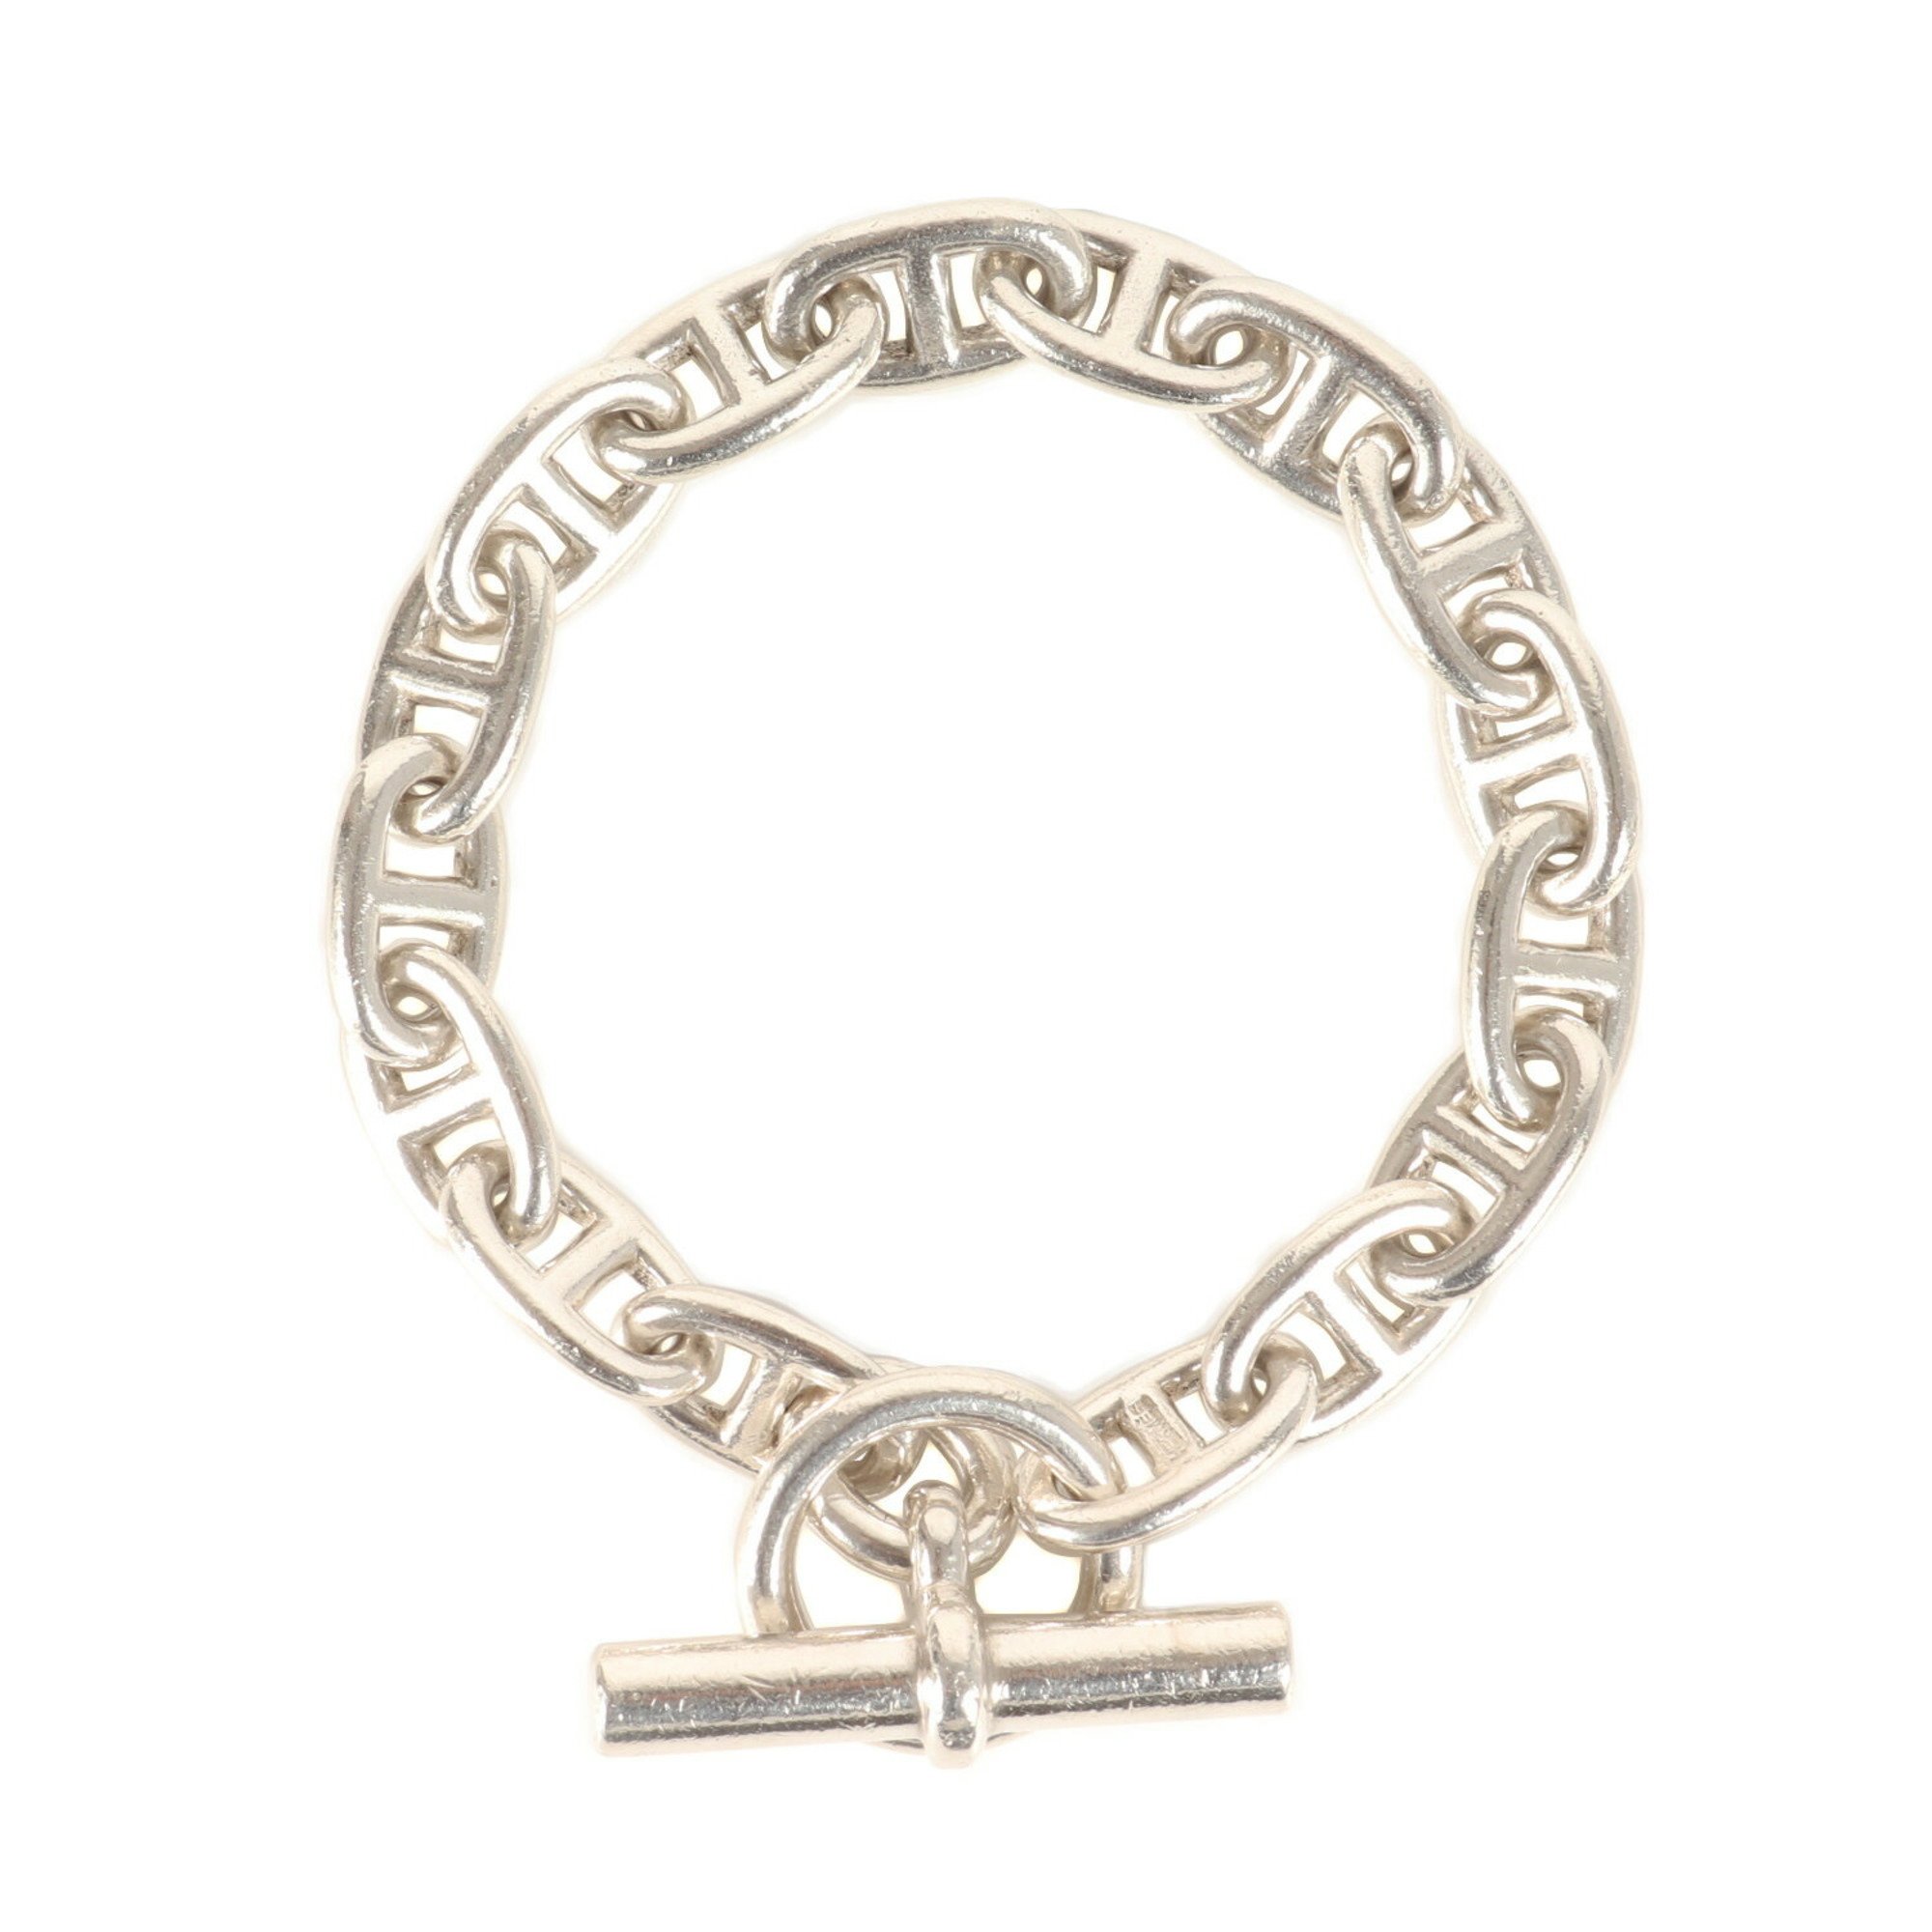 HERMES Chaine dancre Bracelet MM 16Link Silver Handmade Stamped Ag925 16 Links Men's